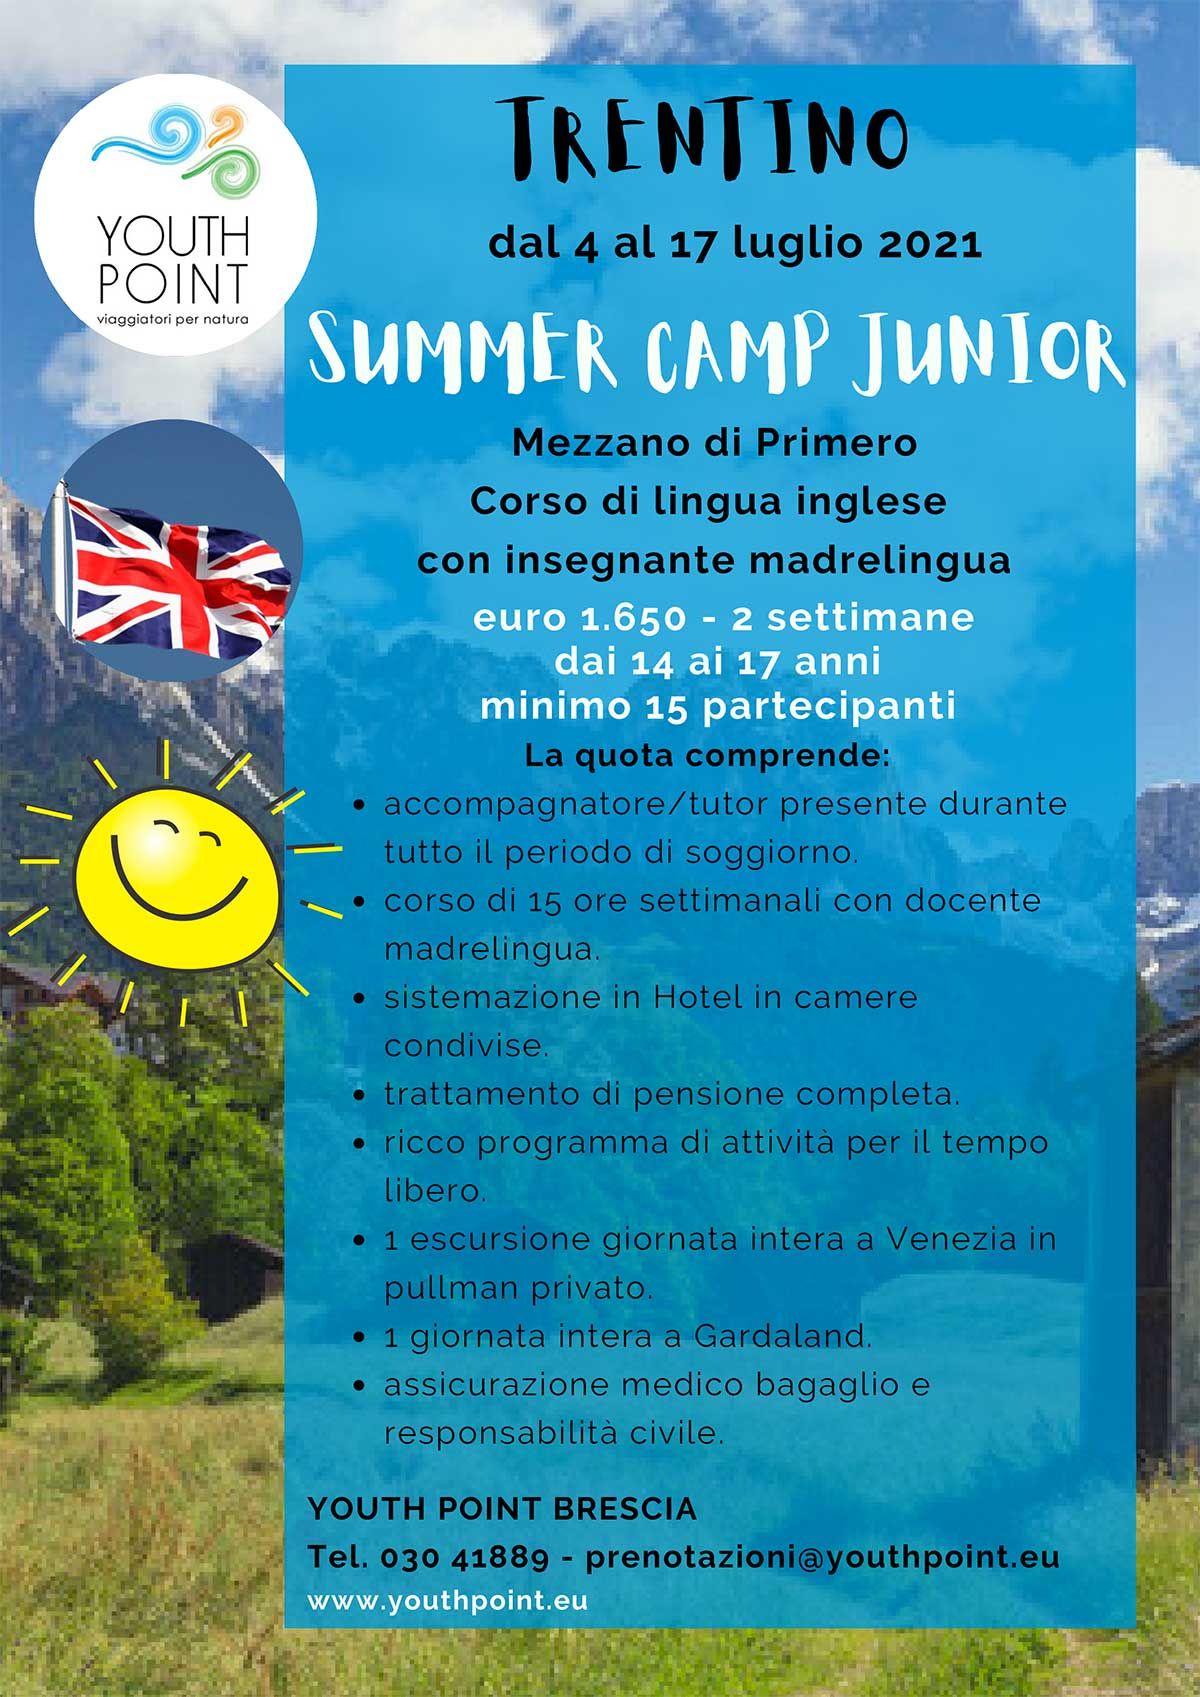 TRENTINO_2021_Junior-Summer-Camp-youth